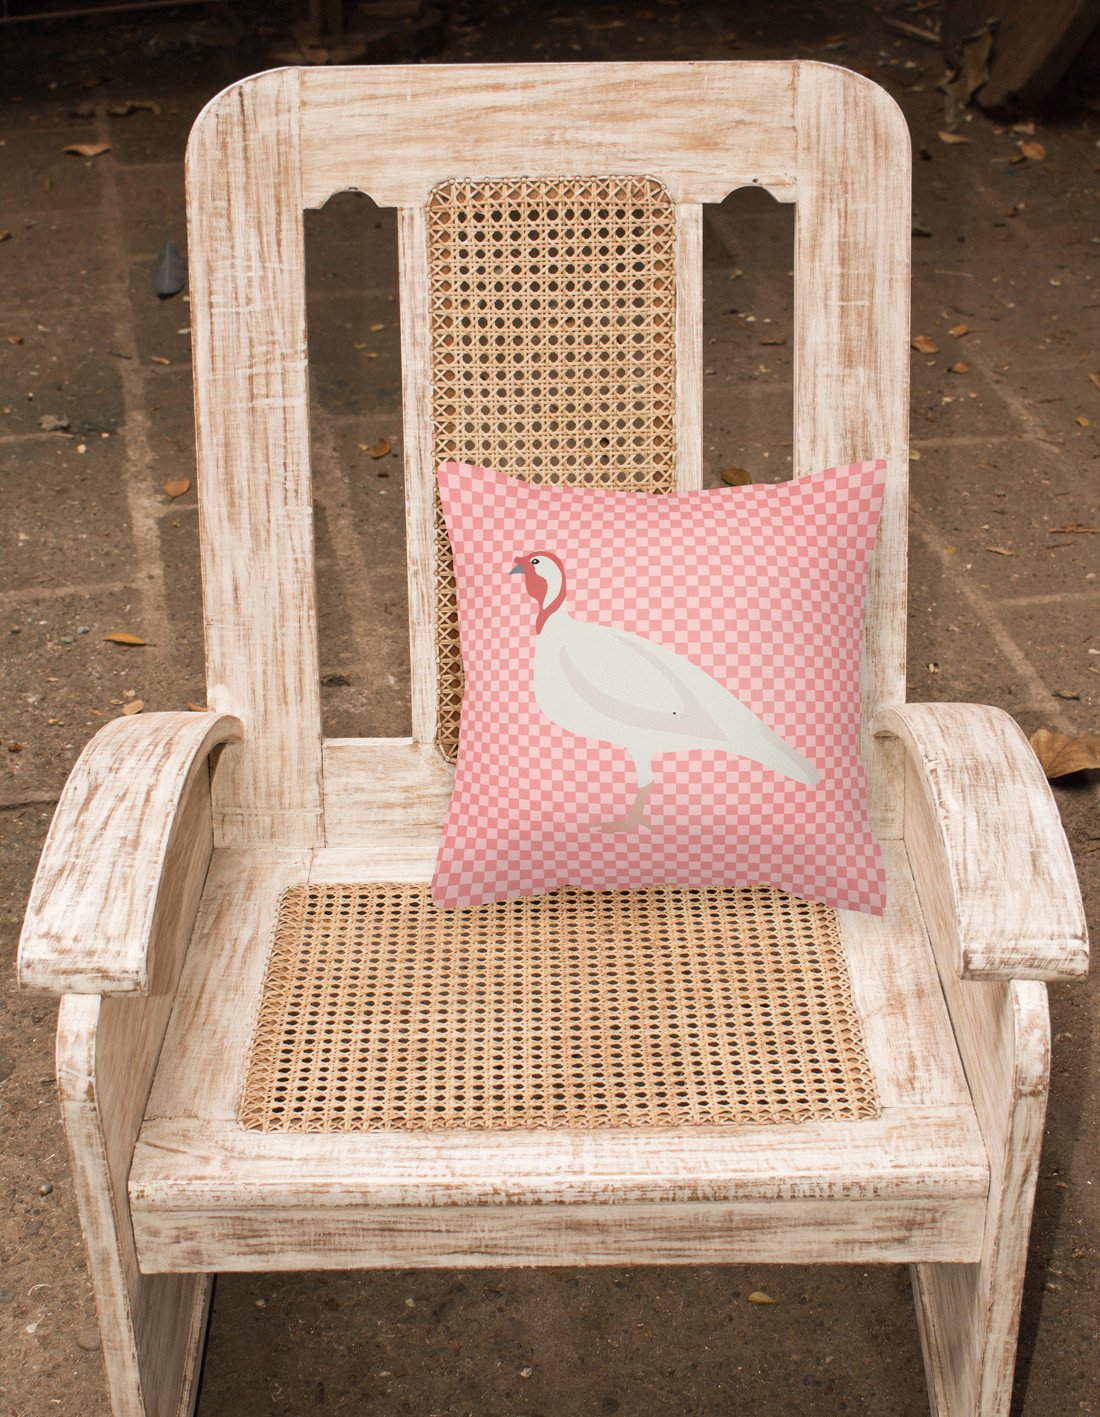 Beltsville Small White Turkey Hen Pink Check Fabric Decorative Pillow BB7989PW1818 by Caroline's Treasures